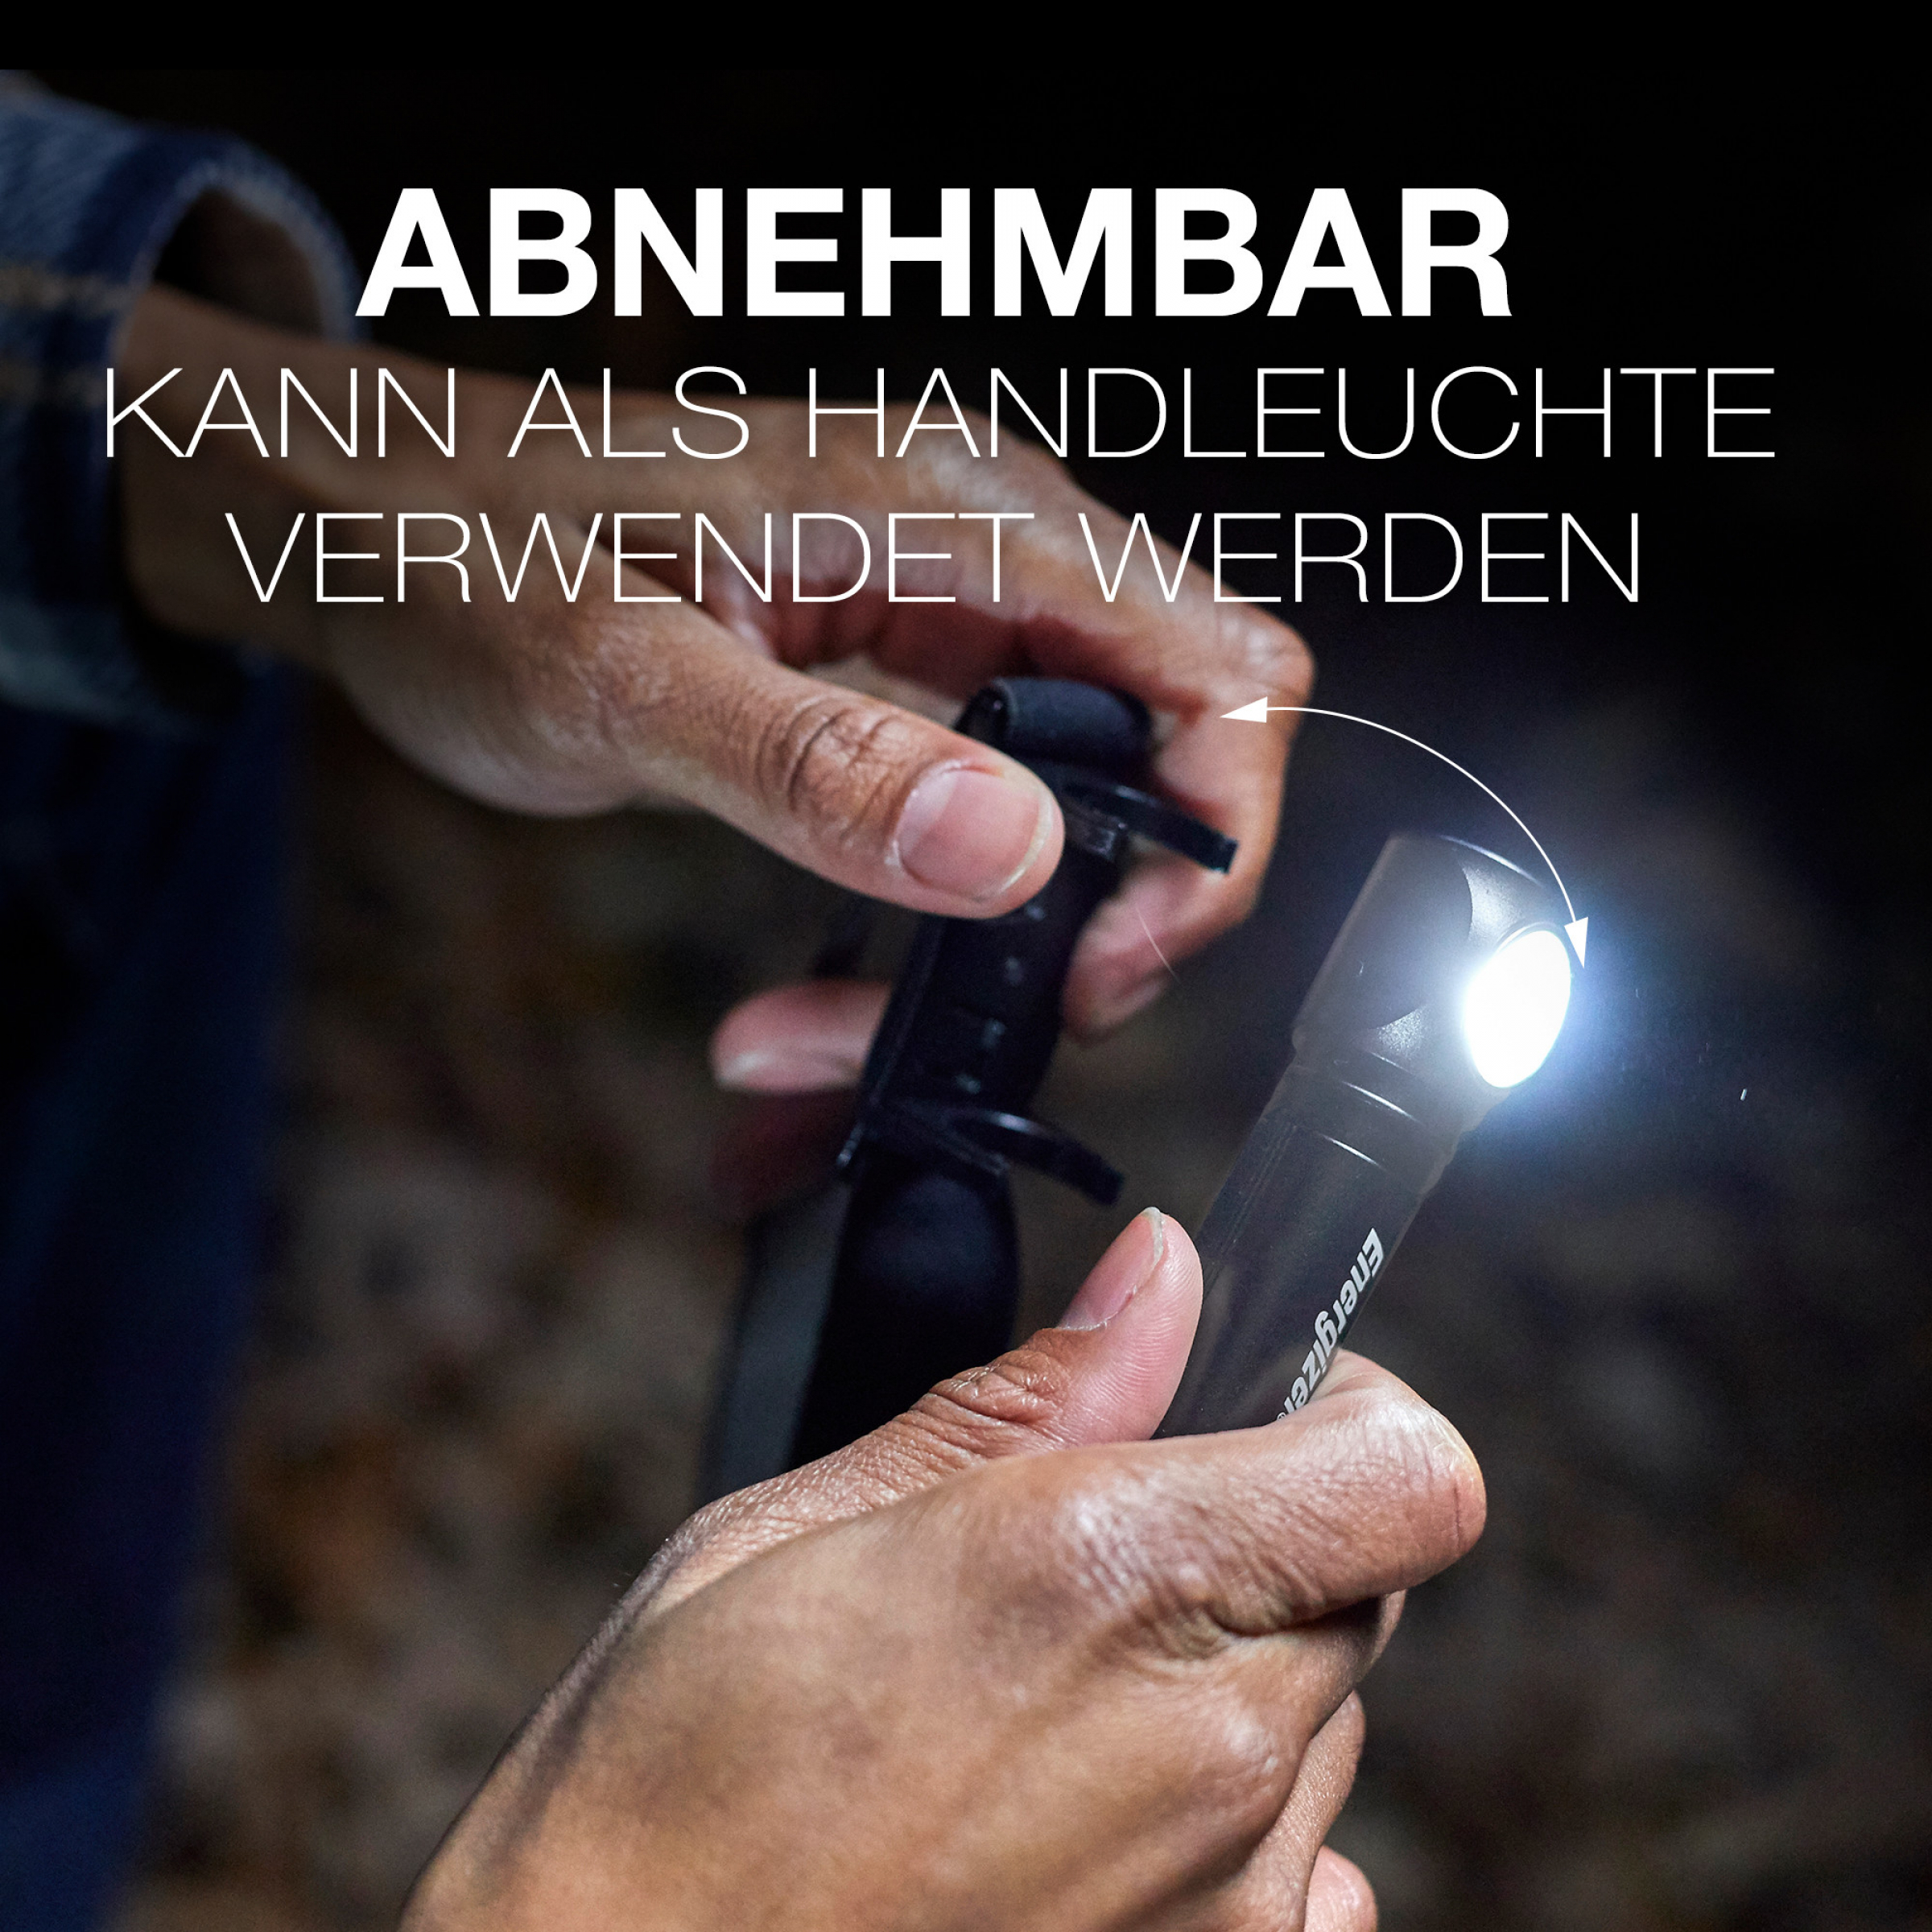 Energizer Headlamp/Flashlight Hybrid Power Headlamp